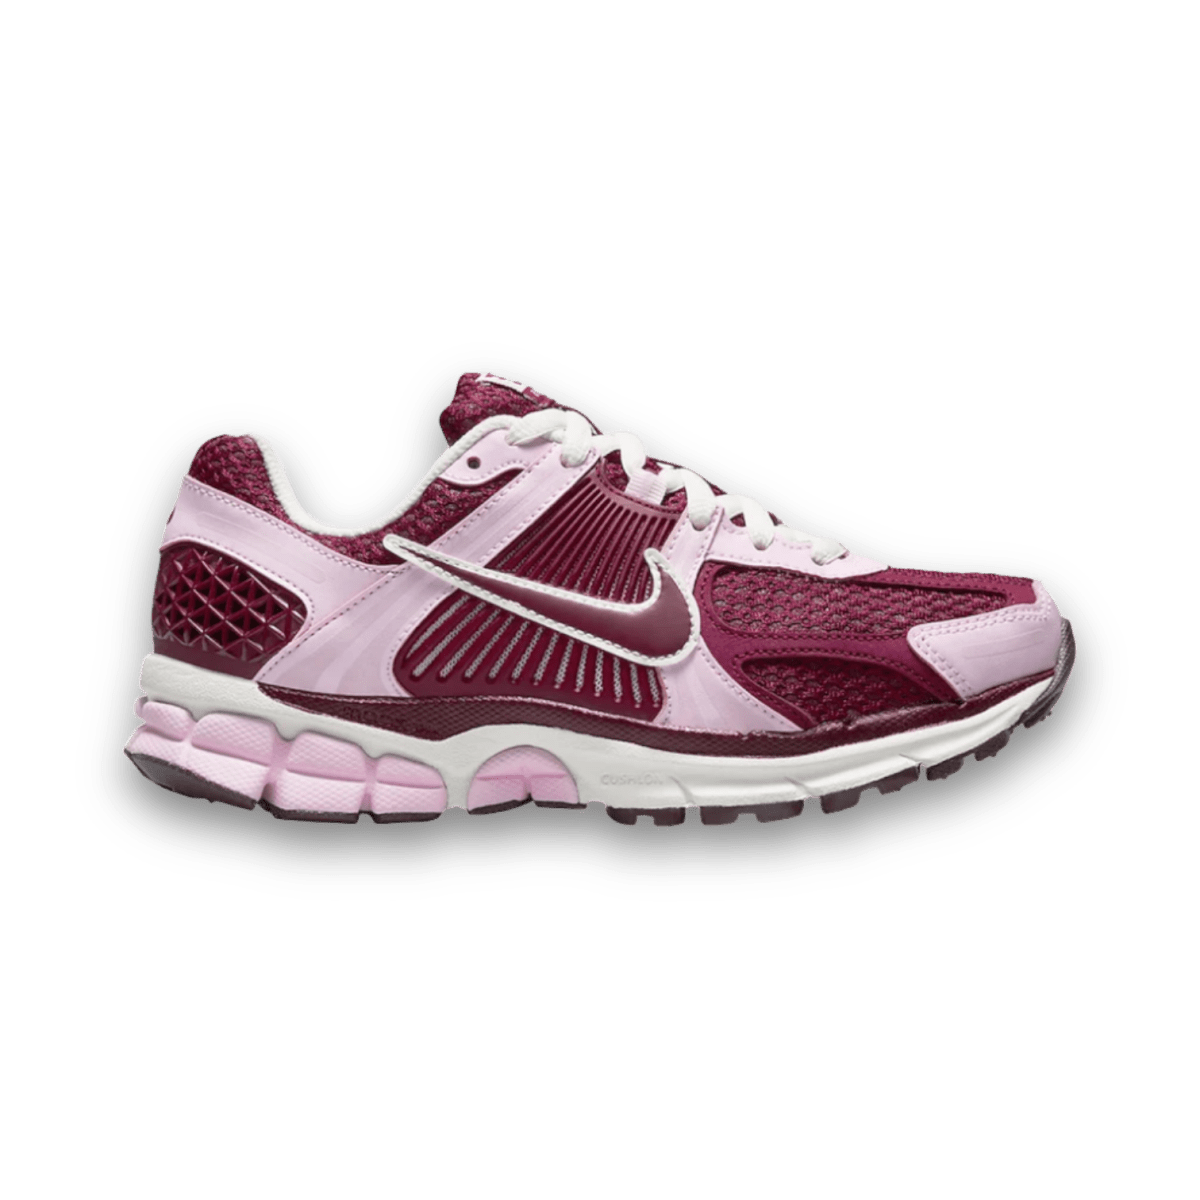 Air Zoom Vomero 5 'Pink Foam Team Red' - Women - Low Sneaker - Nike - Jawns on Fire - sneakers